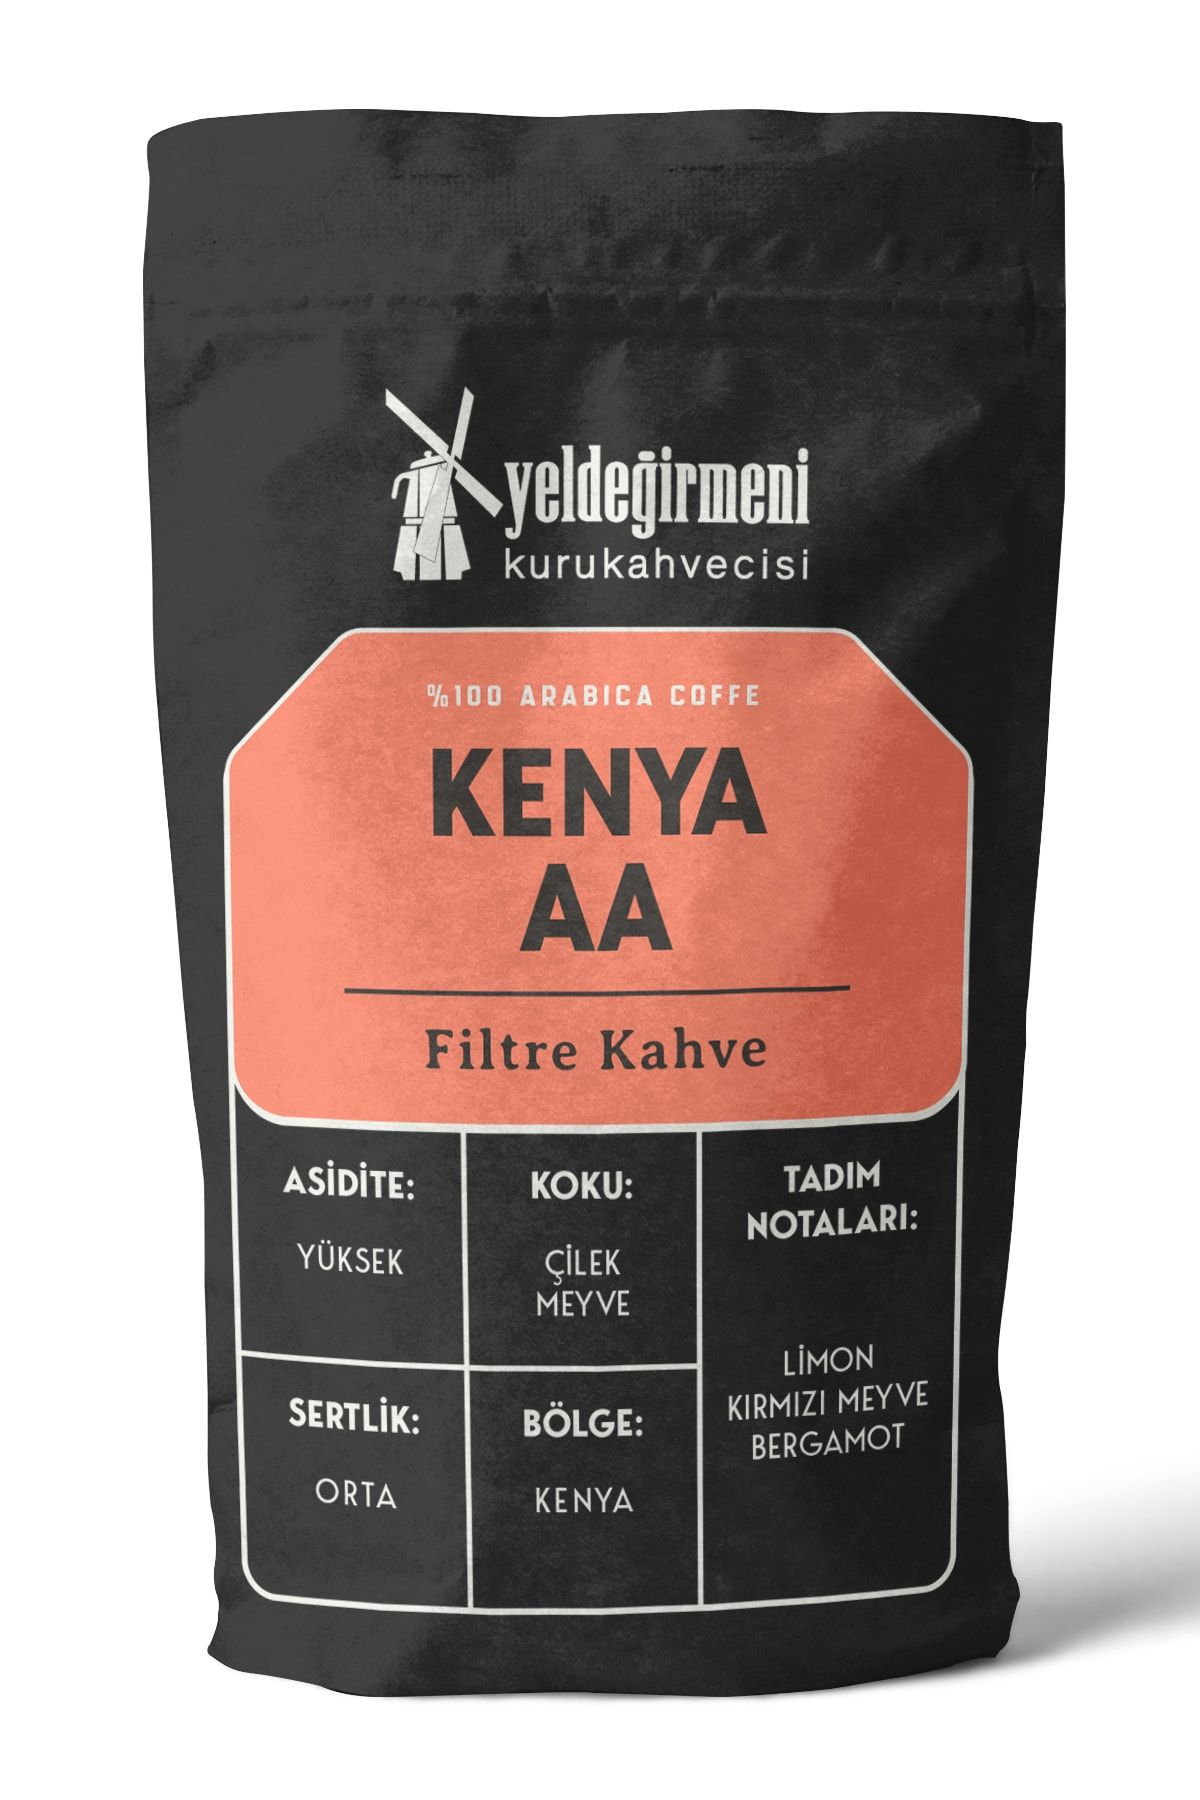 Yeldeğirmeni Kurukahvecisi Kenya Aa Filtre Kahve 1000 gr